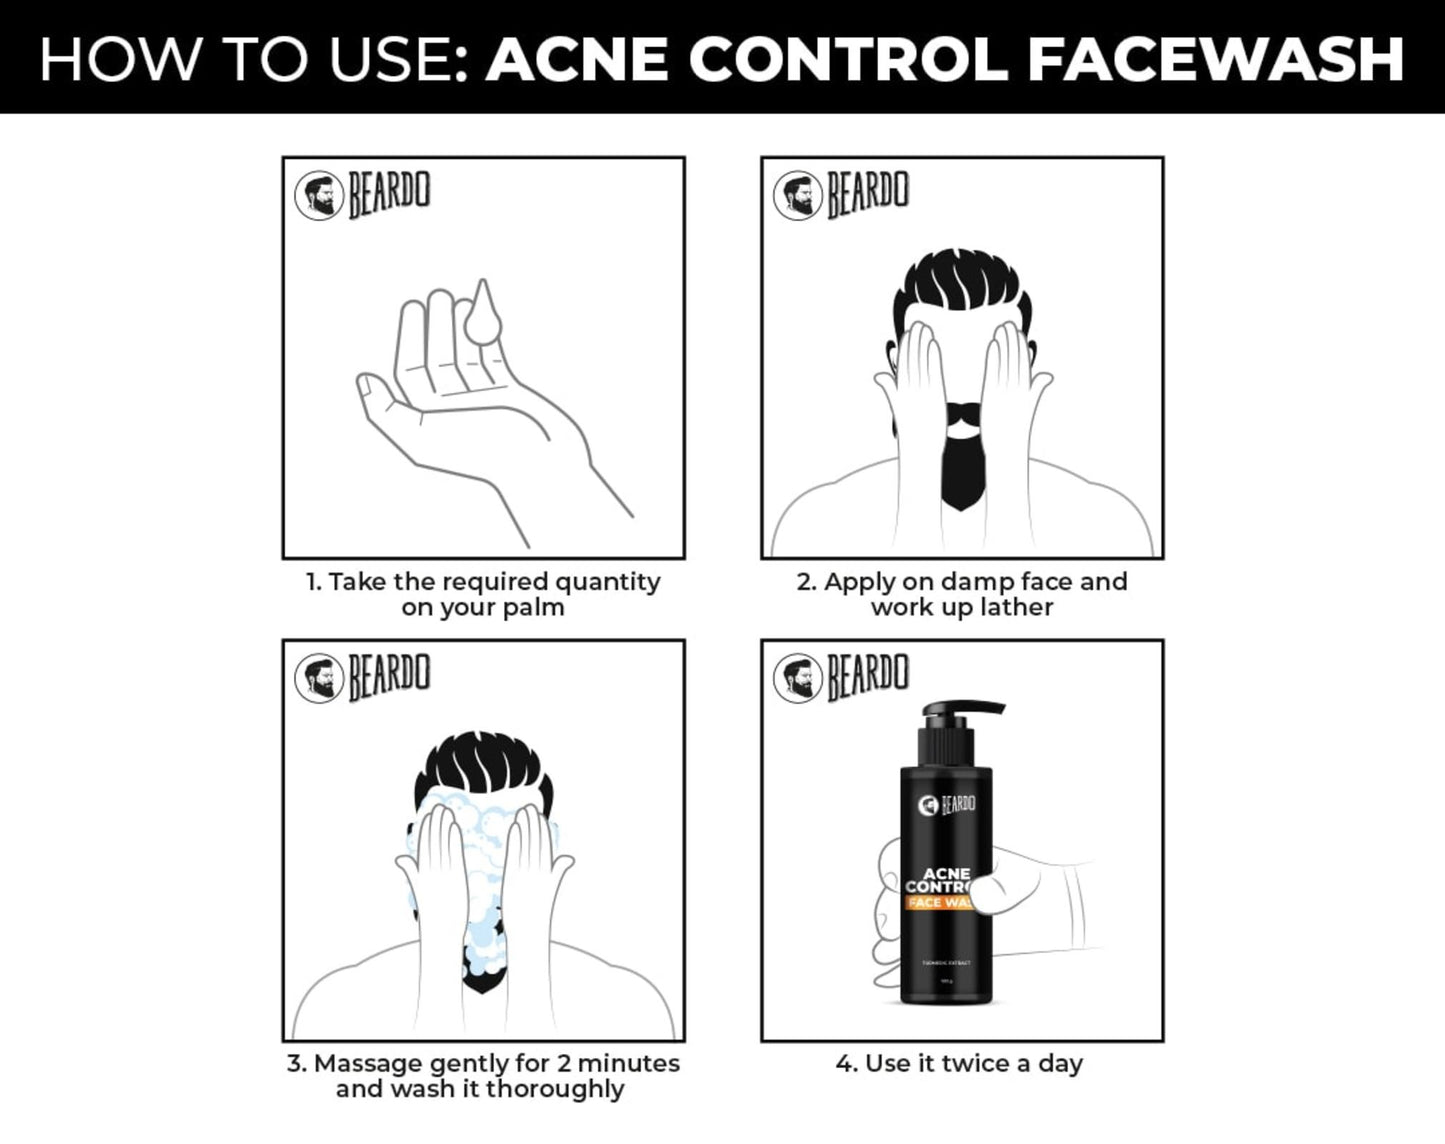 Beardo Acne Control Facewash (100g)